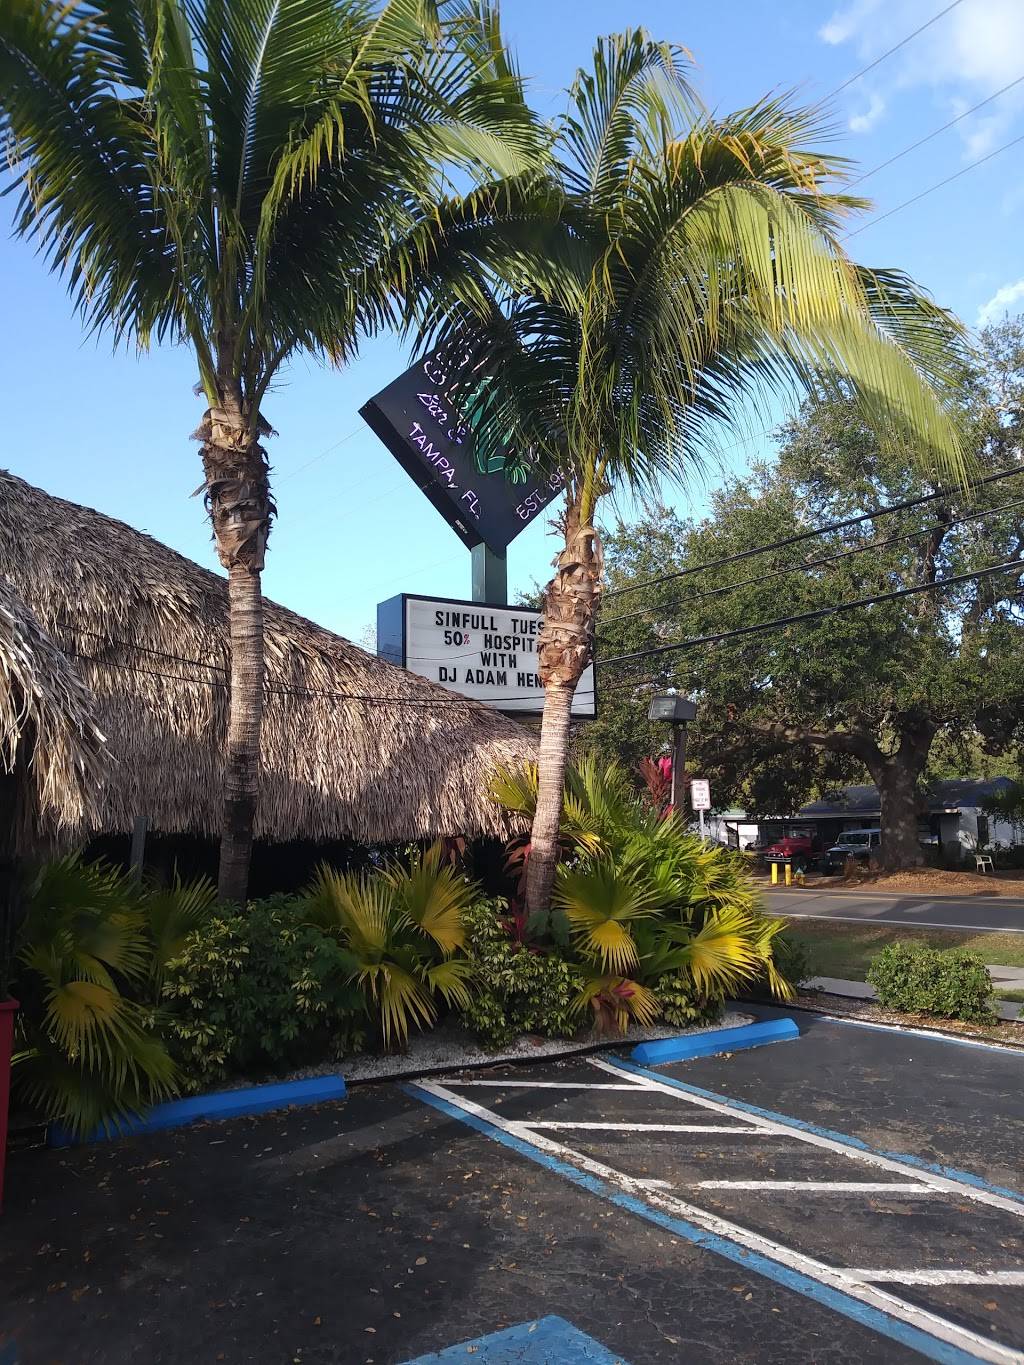 Green Iguana Bar & Grill | 4029 S West Shore Blvd, Tampa, FL 33611, USA | Phone: (813) 837-1234